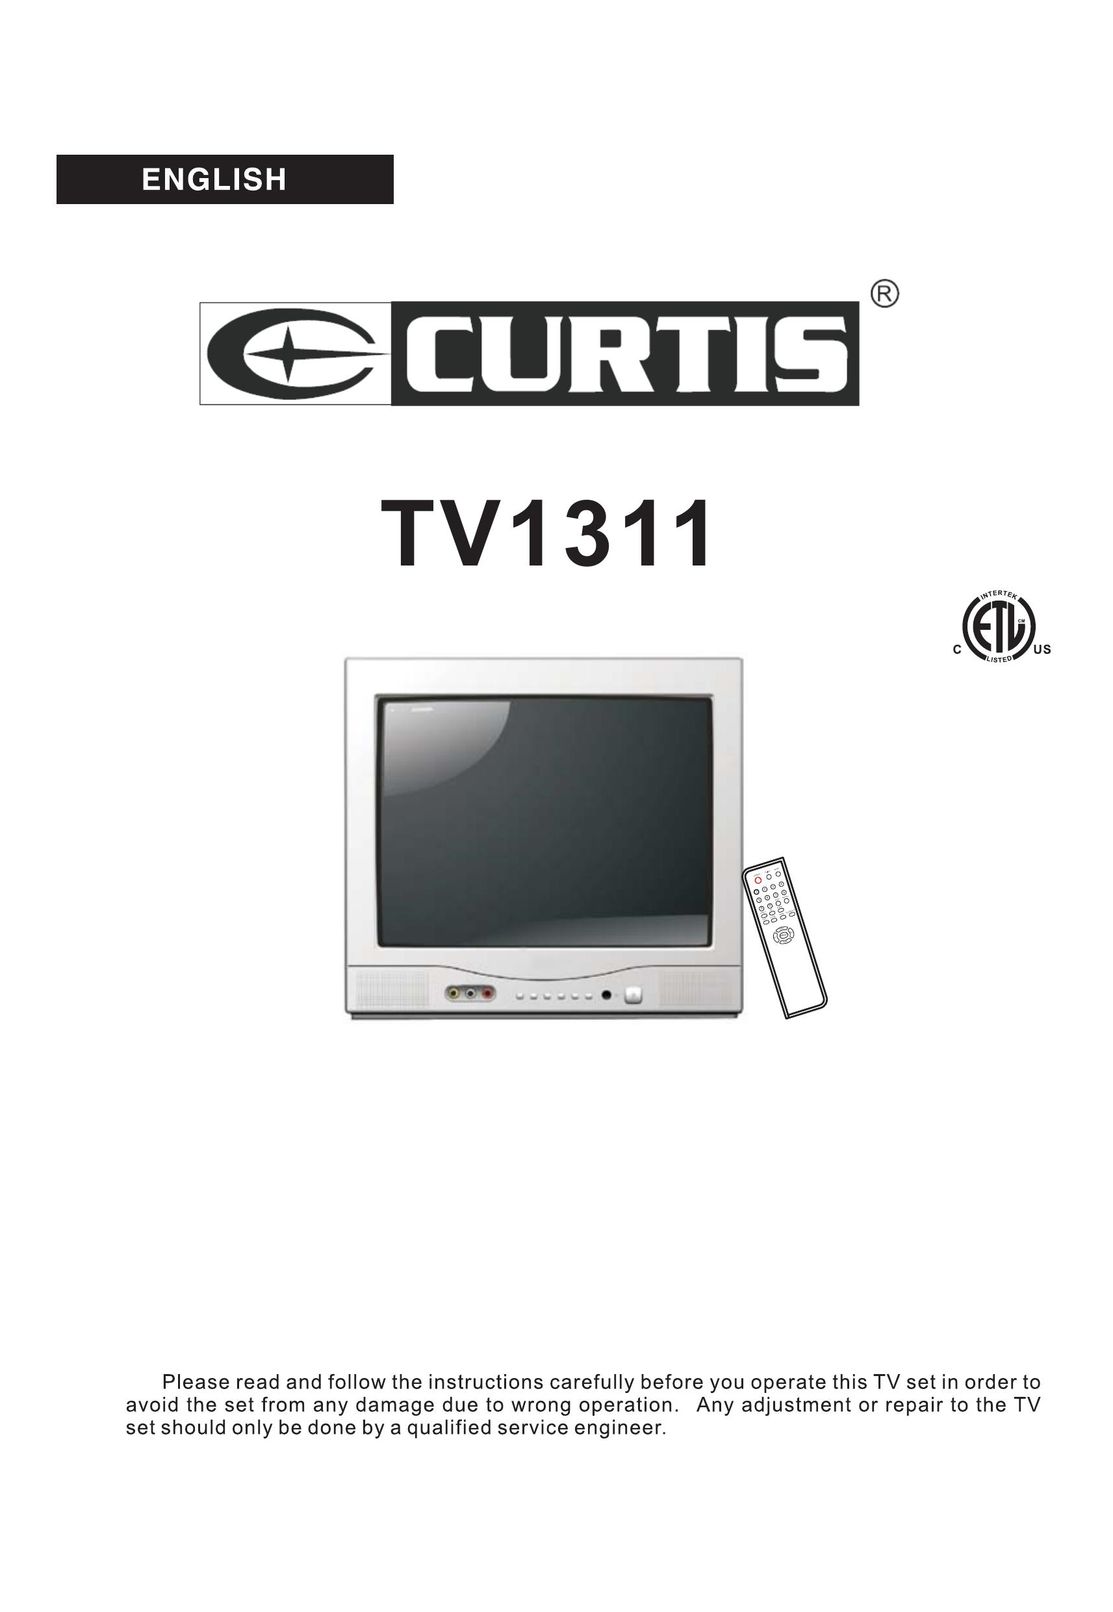 Curtis TV1311 CRT Television User Manual